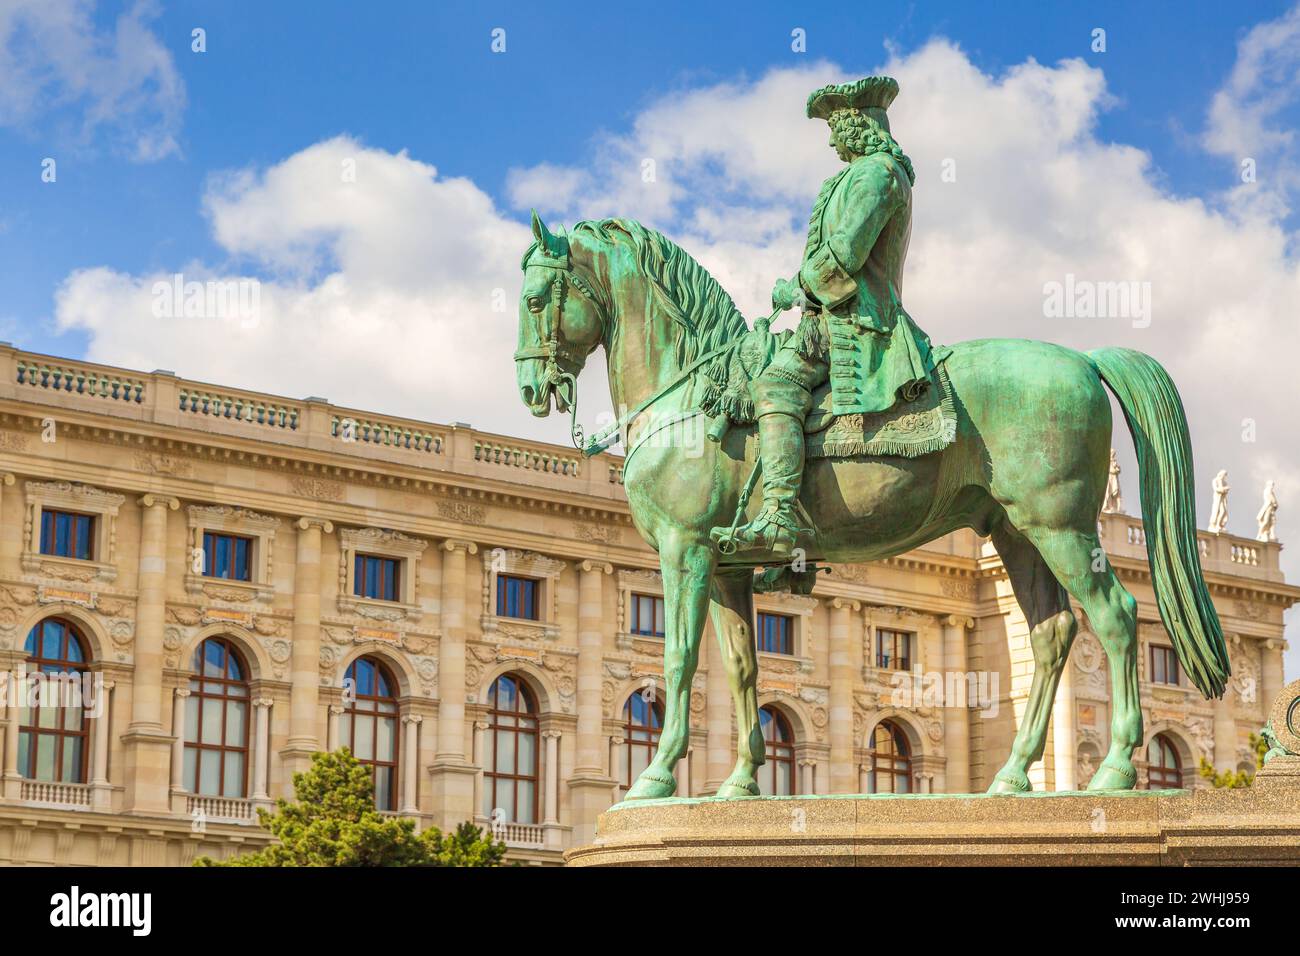 Horseriding statue in Vienna, Austria Stock Photo